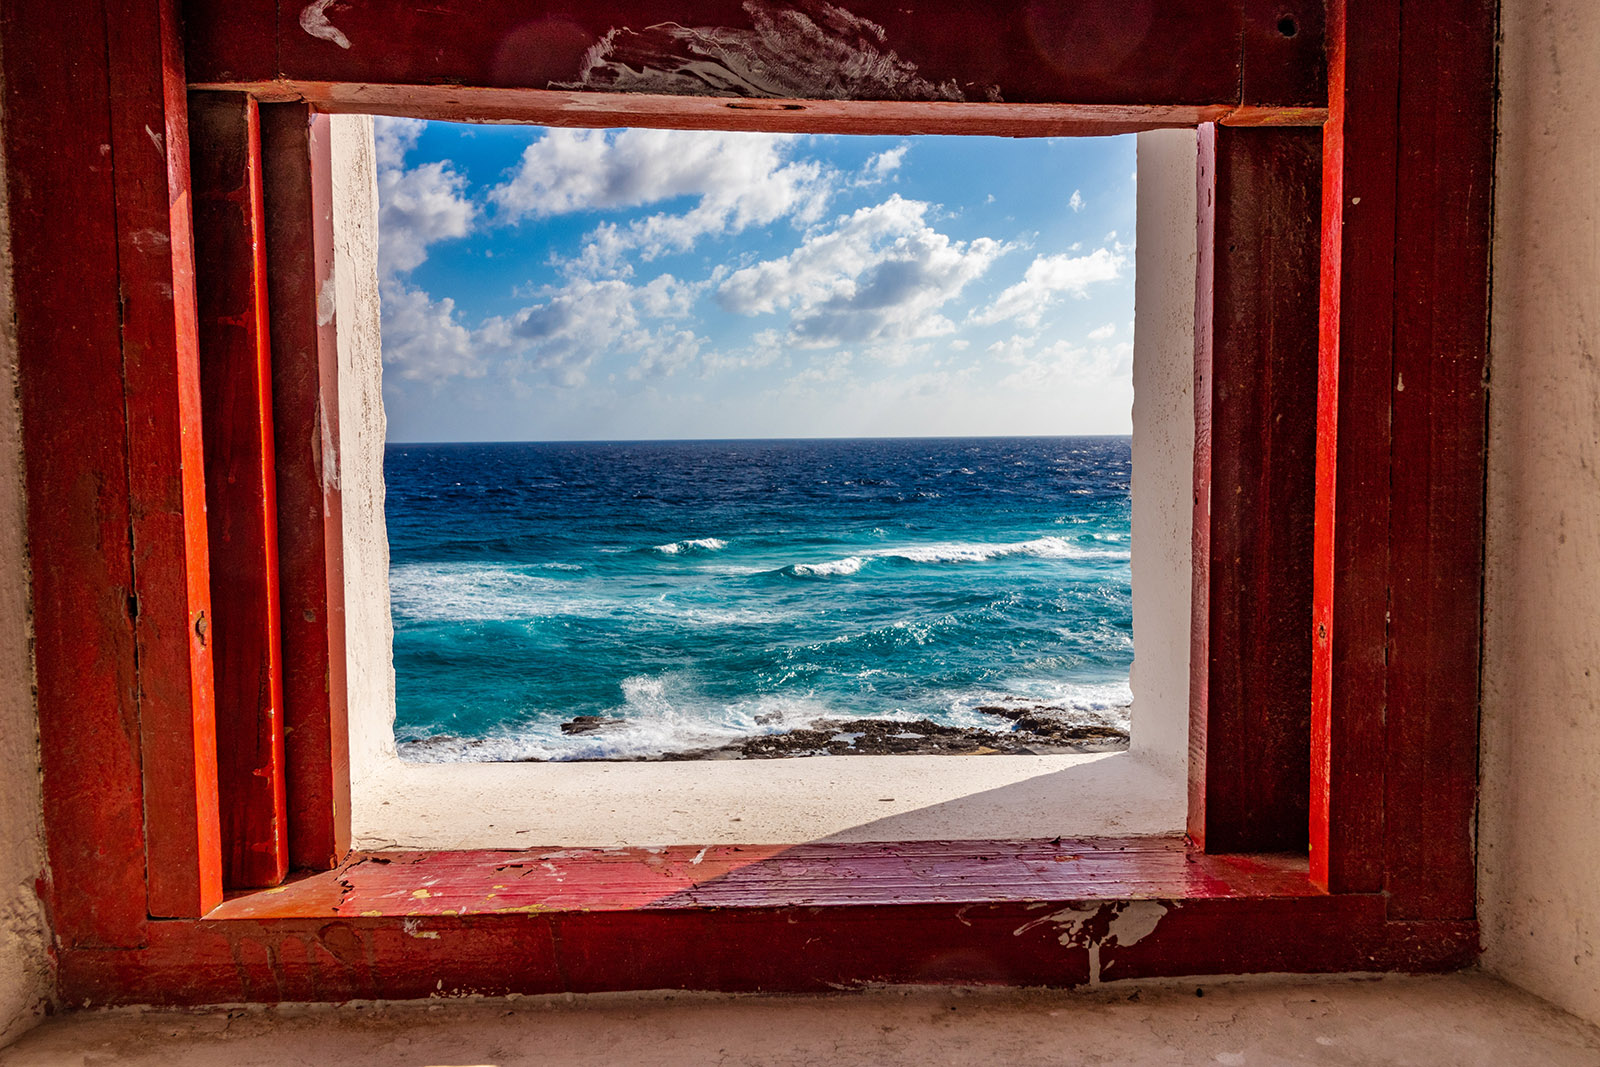 view of the blue ocean through a window